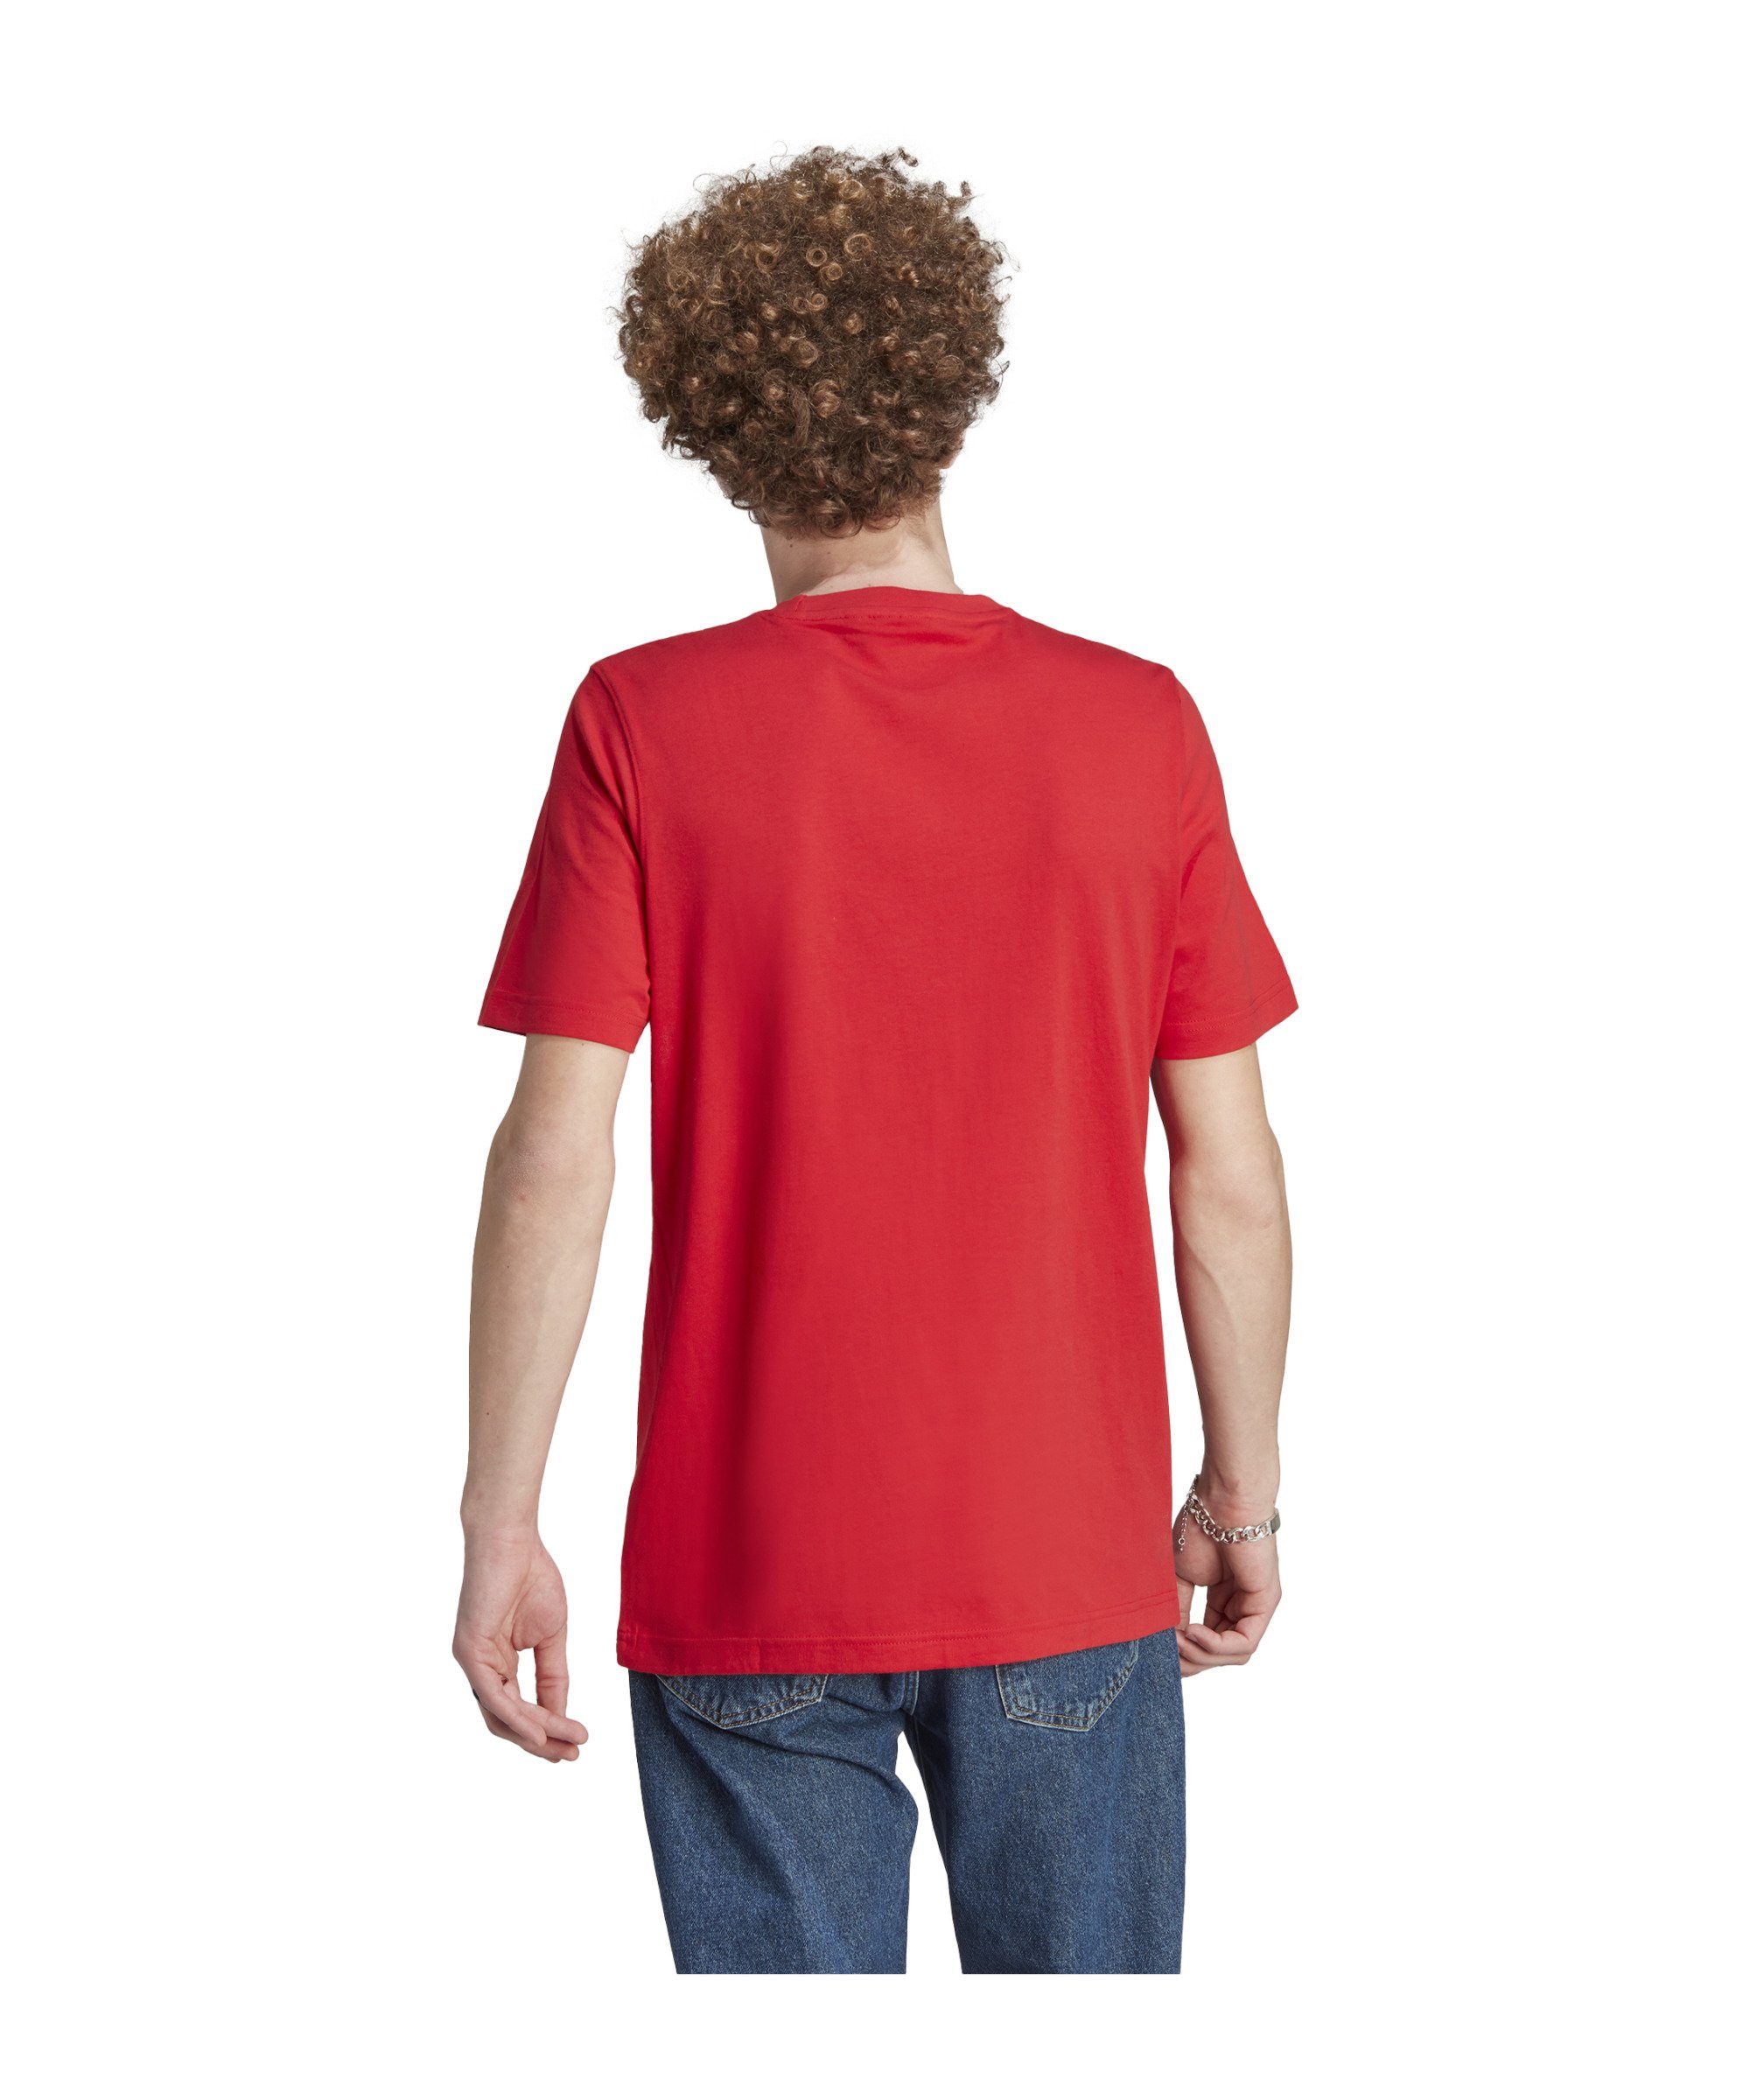 Originals Trefoil adidas T-Shirt default T-Shirt